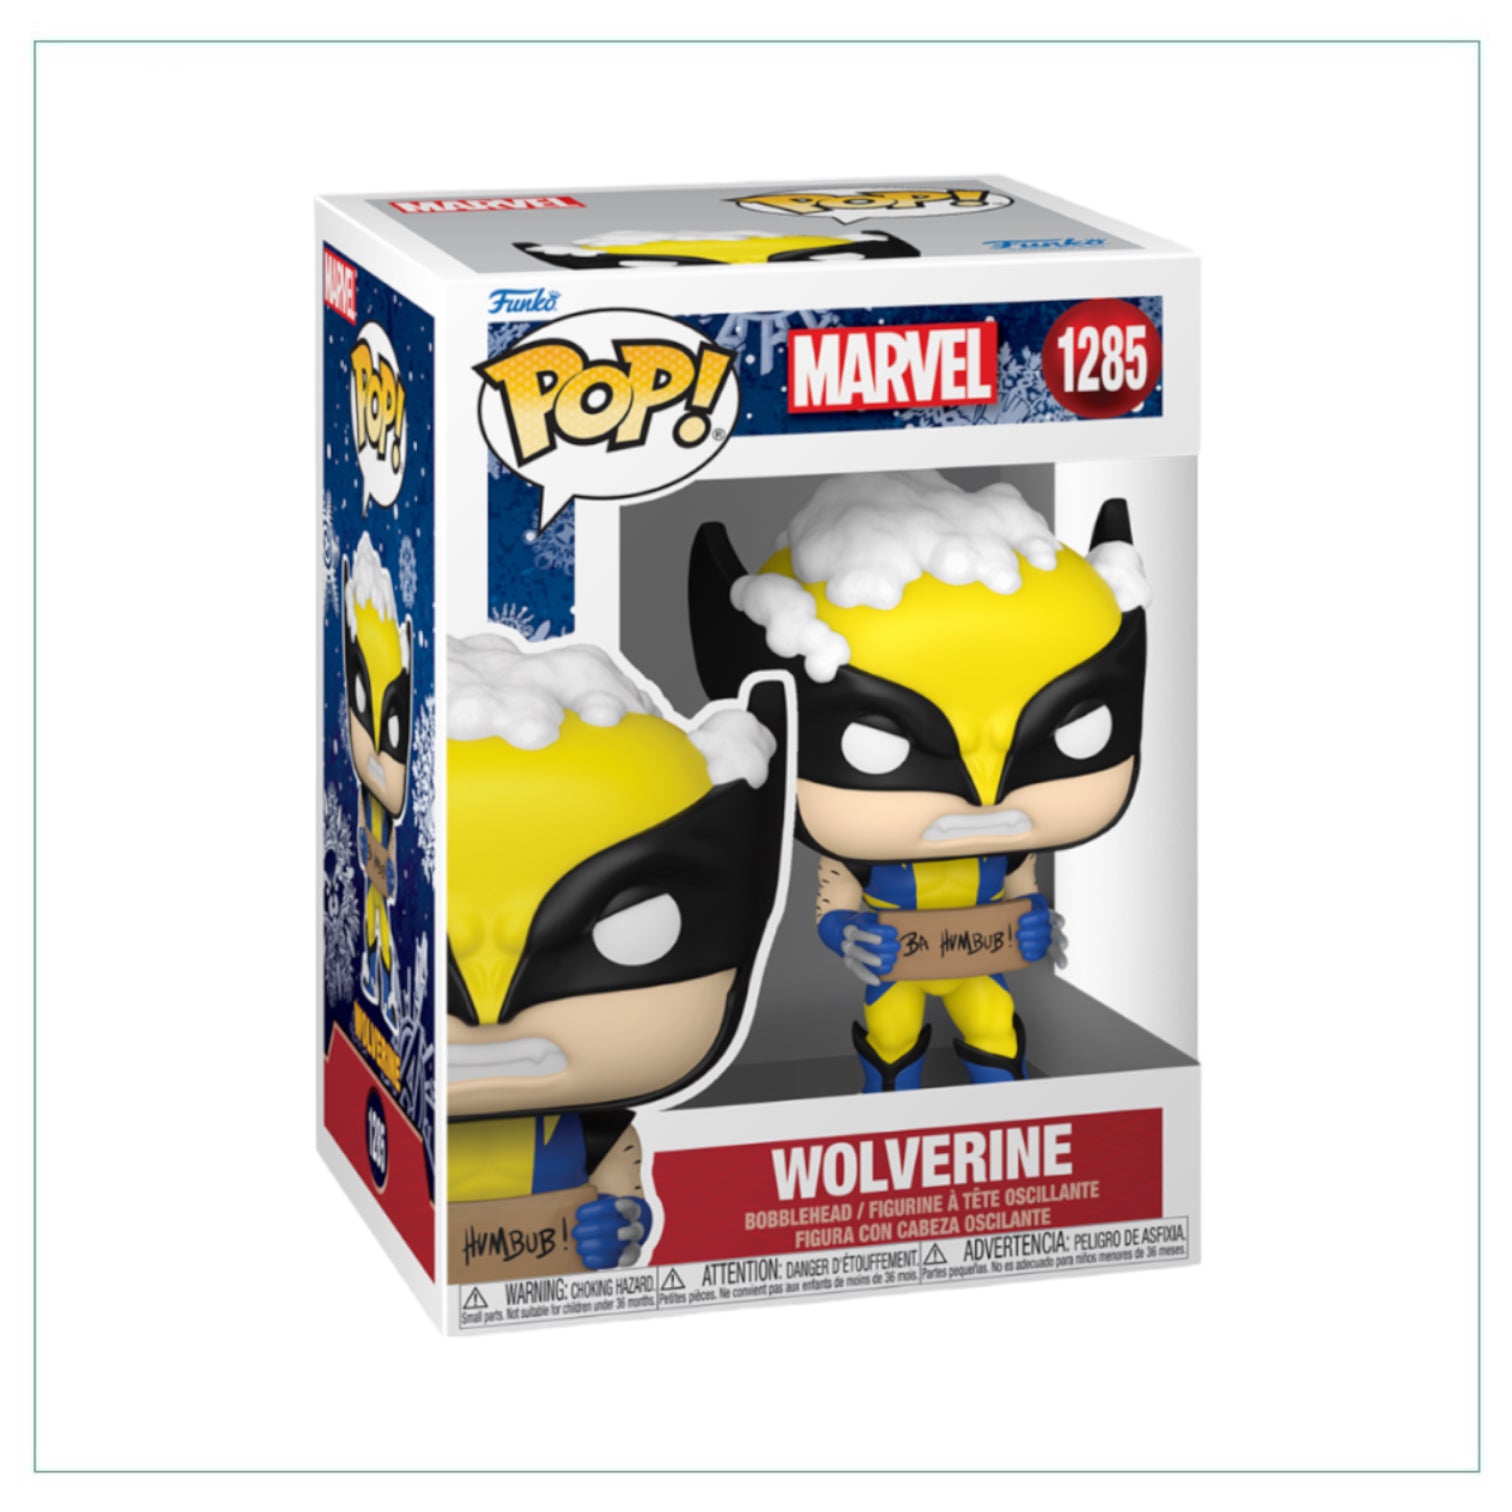 Wolverine #1285 Funko Pop! Marvel Holiday